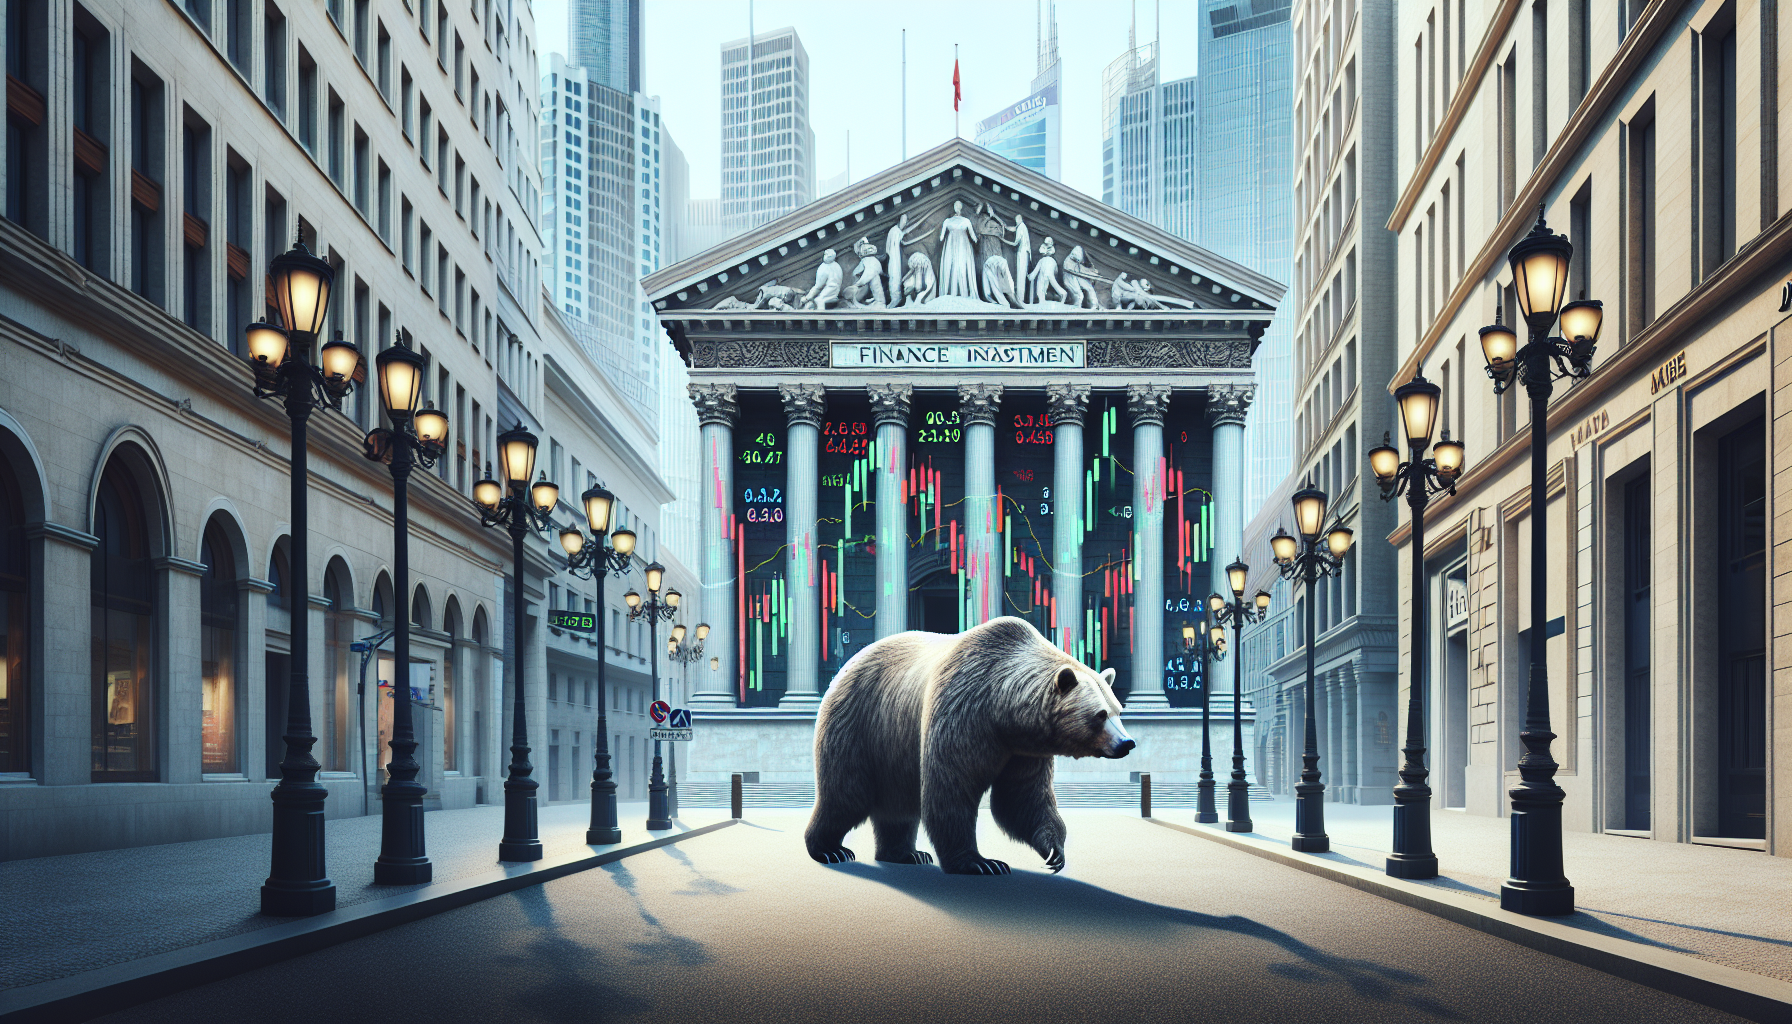 Implications of Wall street's biggest bear Marko Kolanovic's departure from JPMorgan